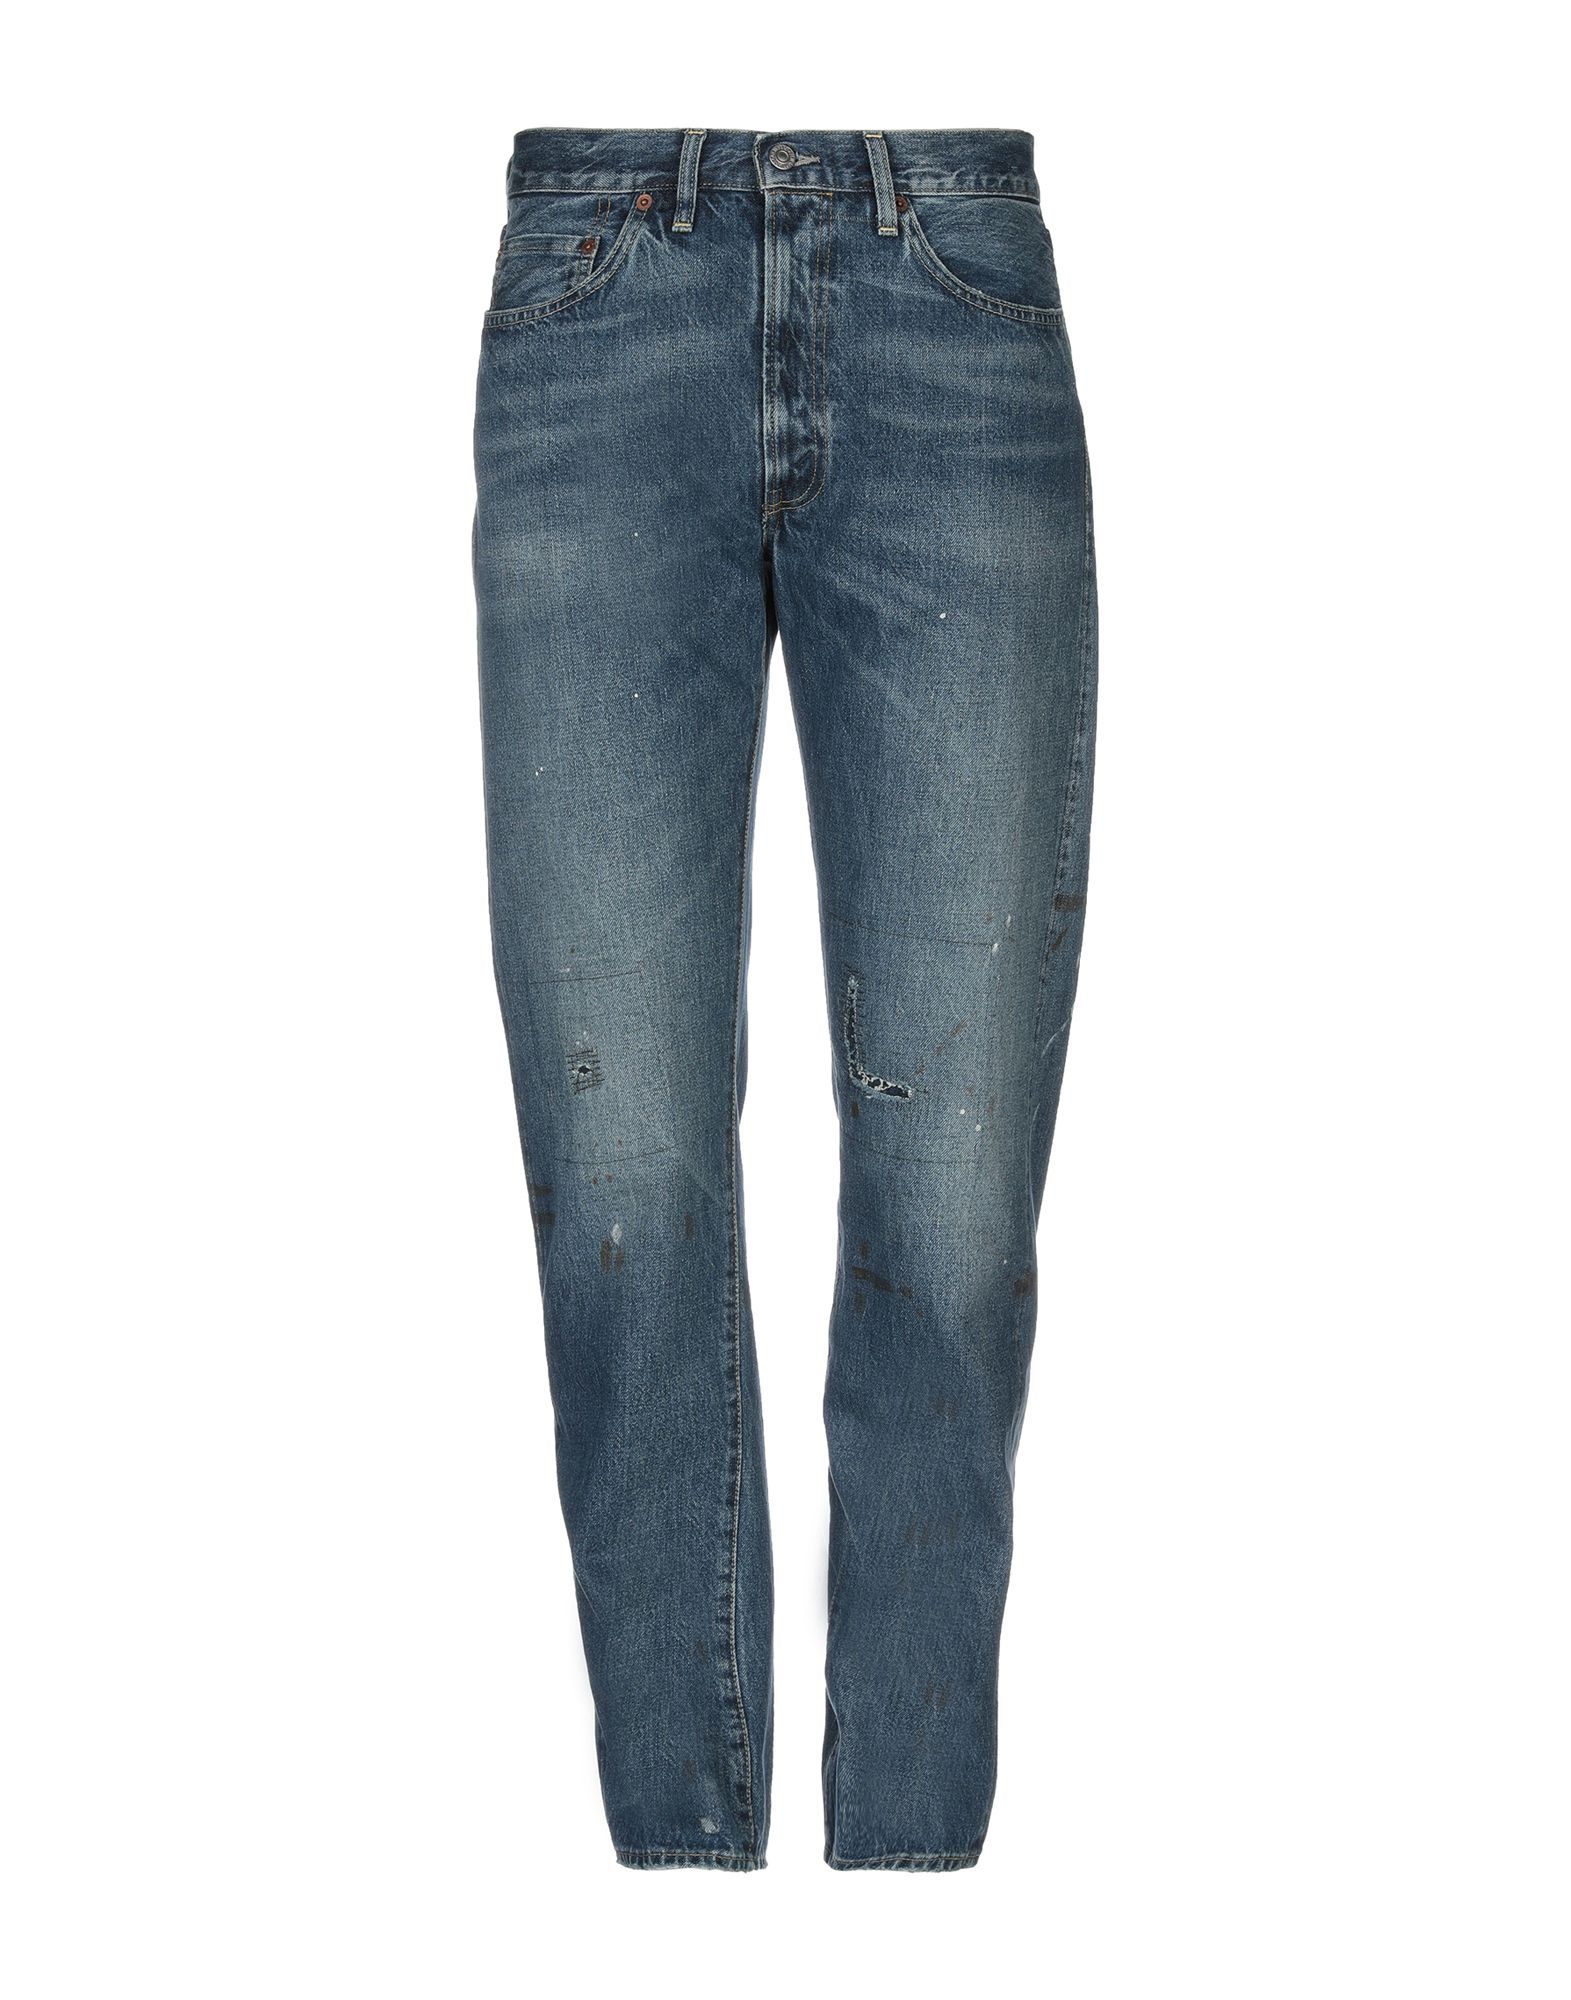 LEVI'S VINTAGE CLOTHING Jeans | YOOX (US)